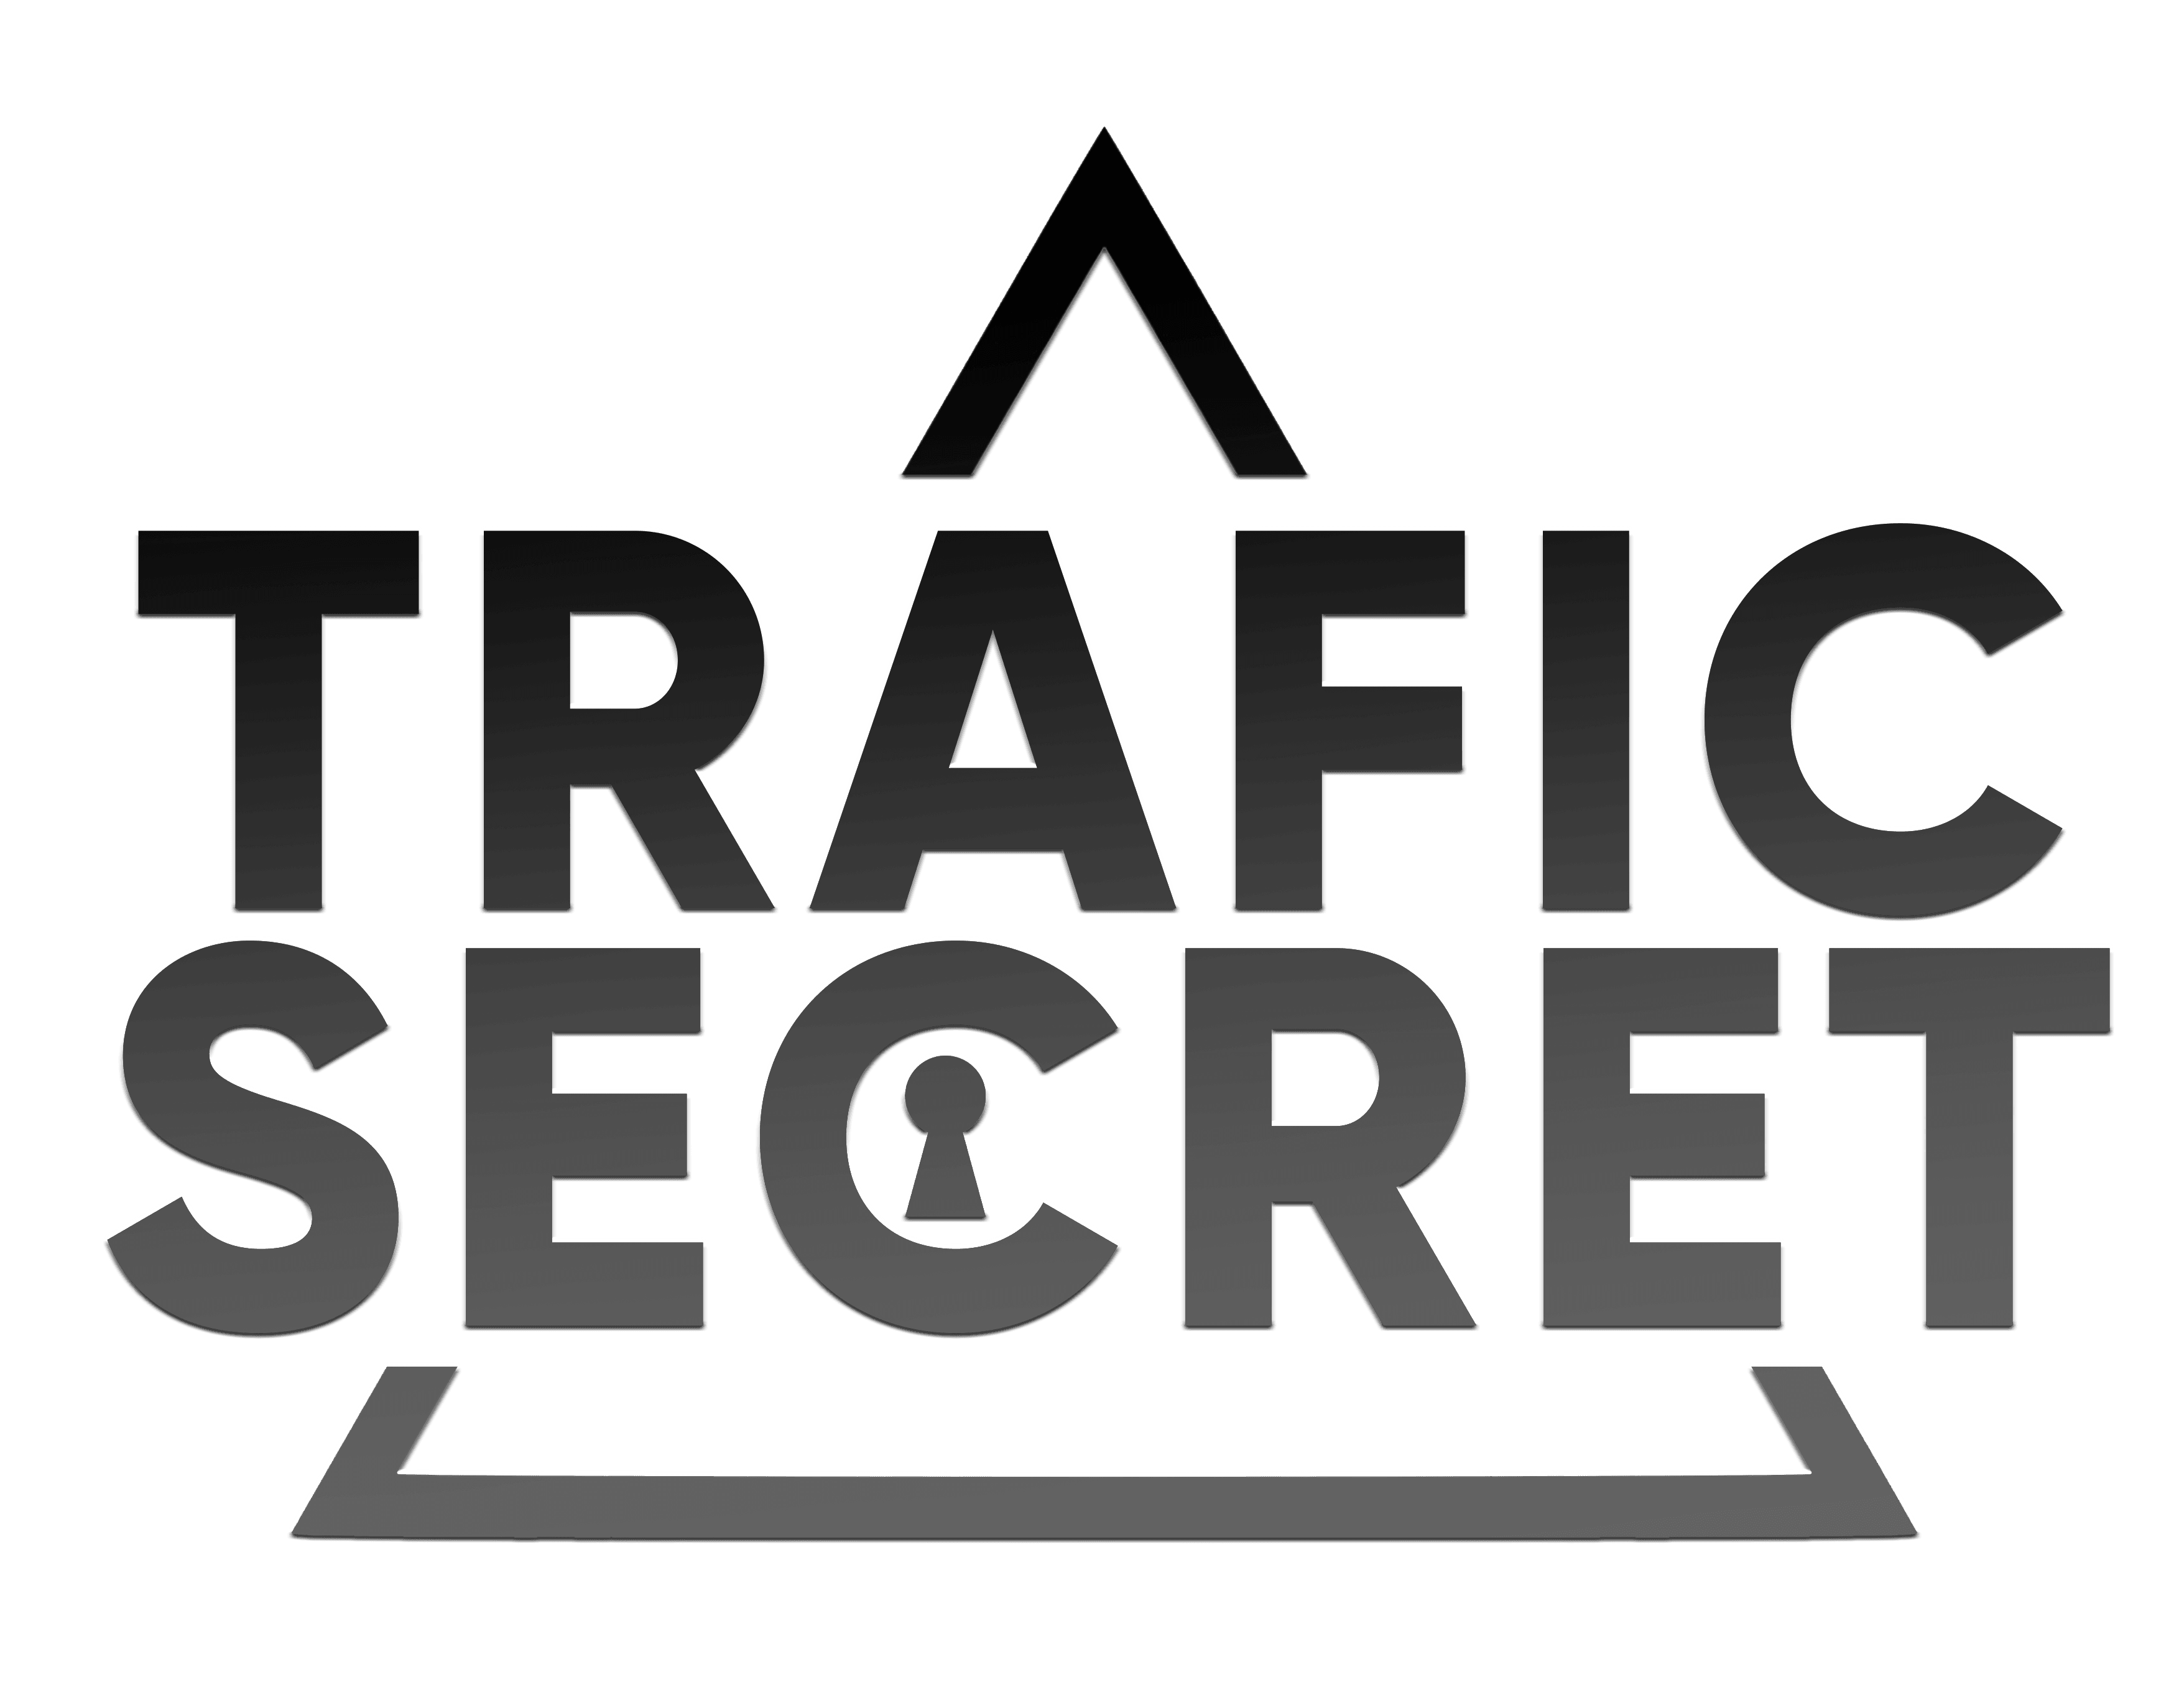 trafic secret